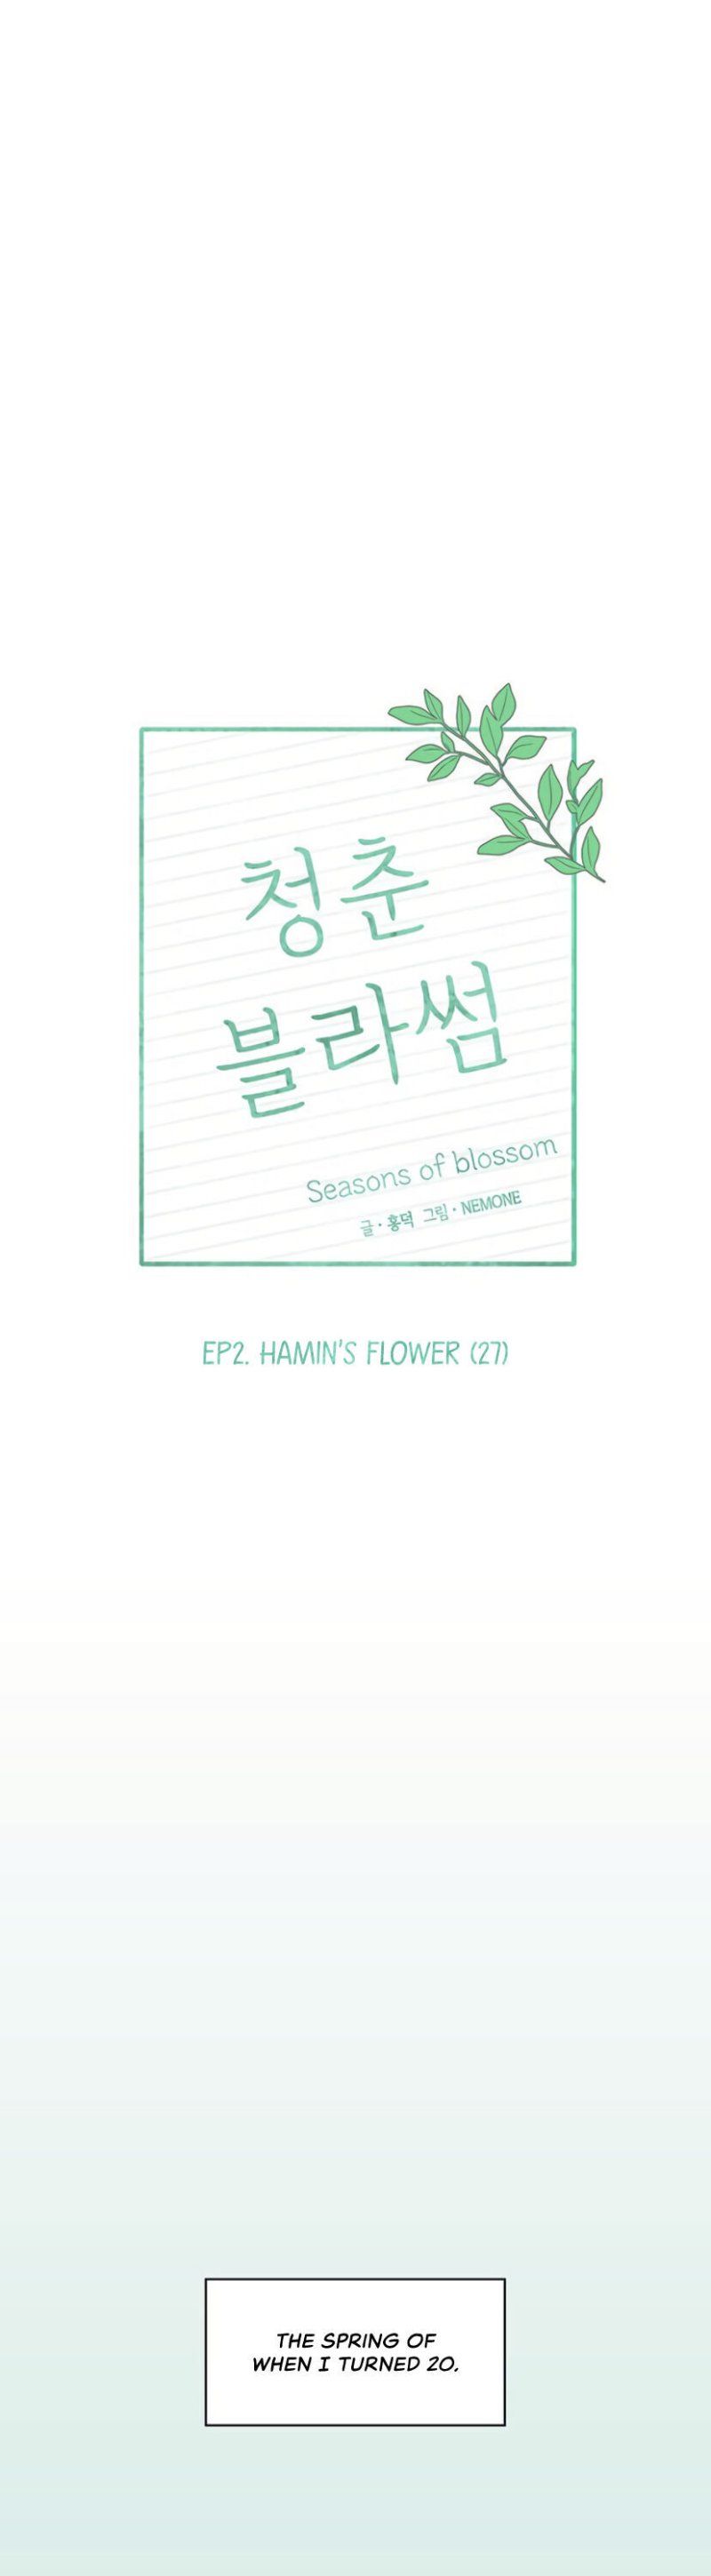 Seasons Of Blossom 57 17